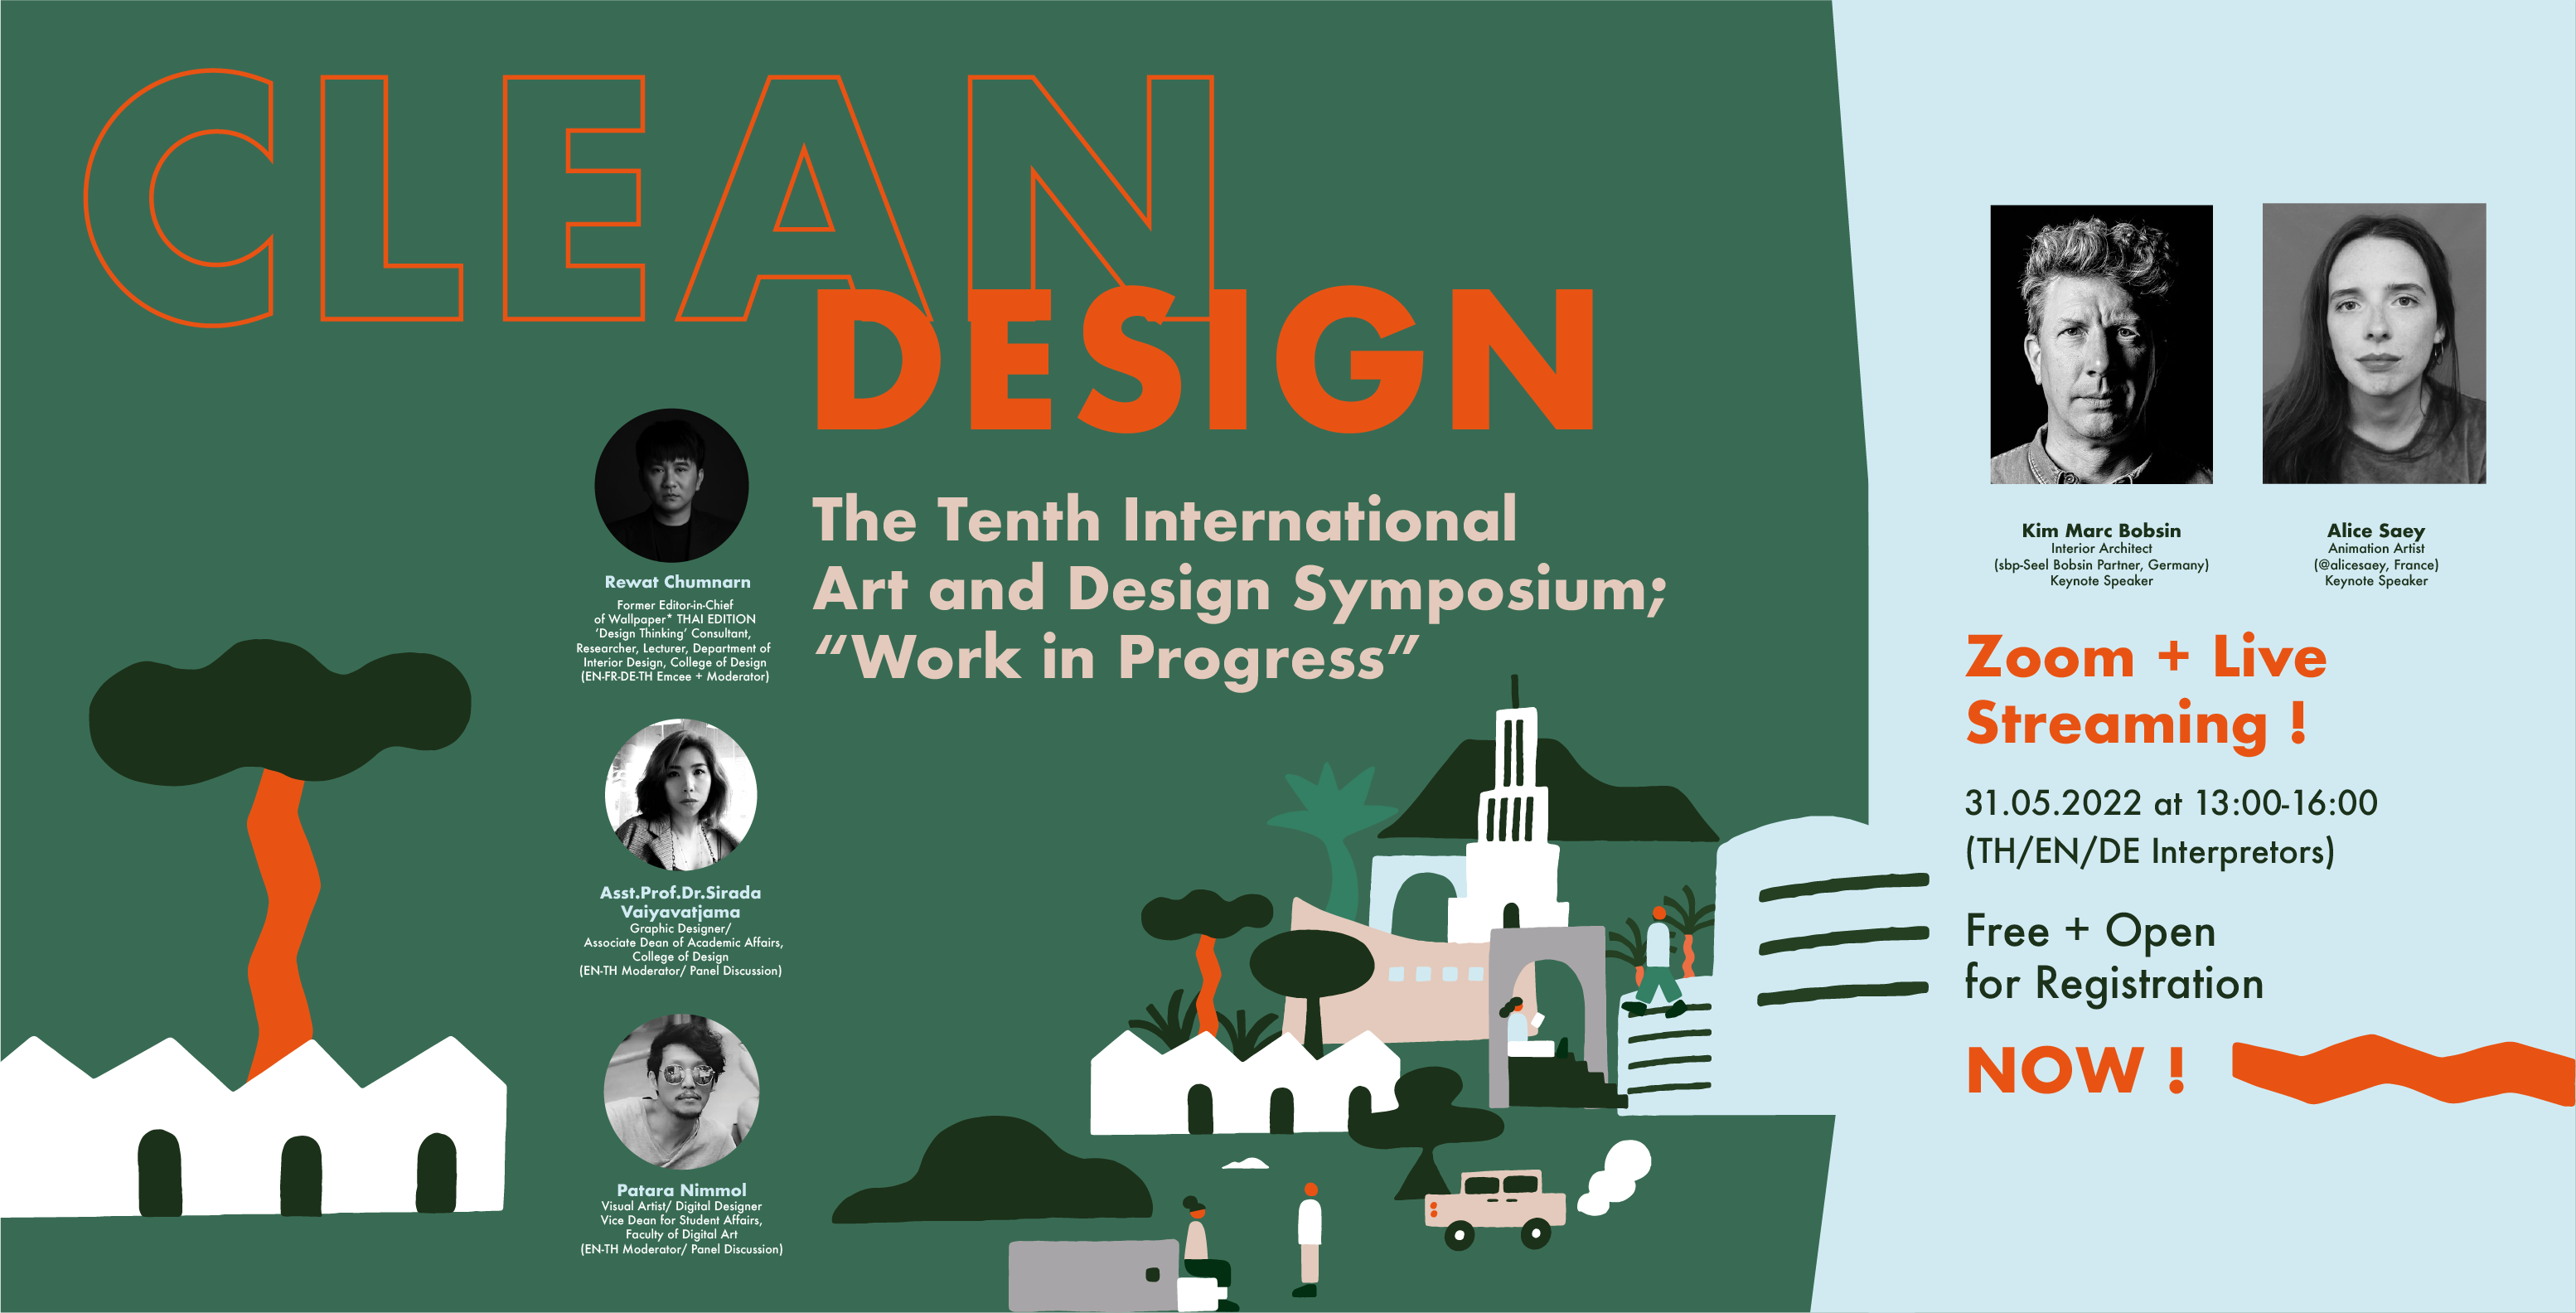 The Tenth International Arts and Design Symposium “Work in Progress : CLEAN DESIGN”